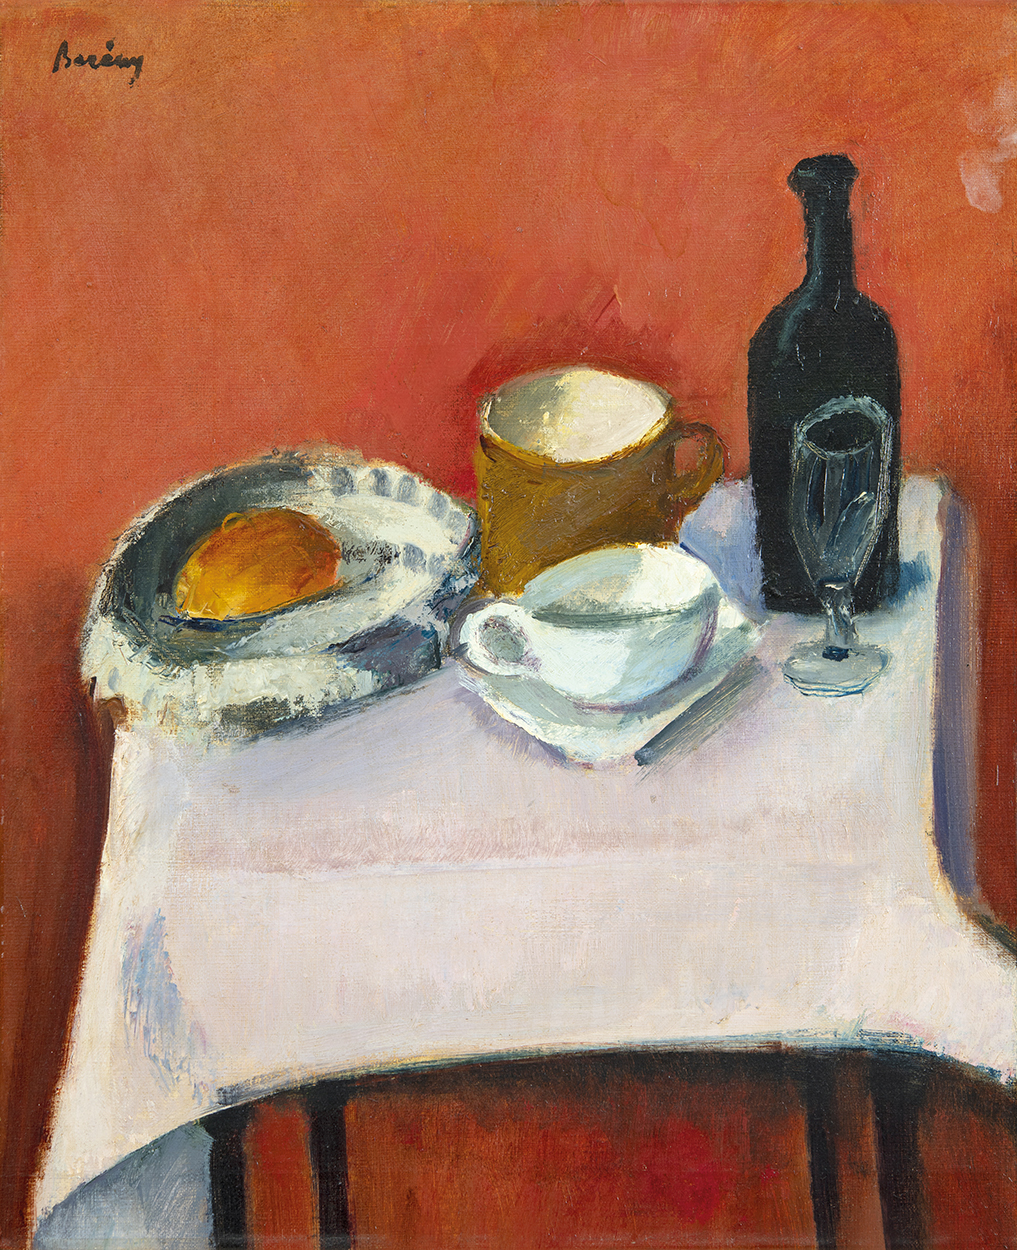 Berény Róbert (1887-1953) Breakfast Table, around 1928